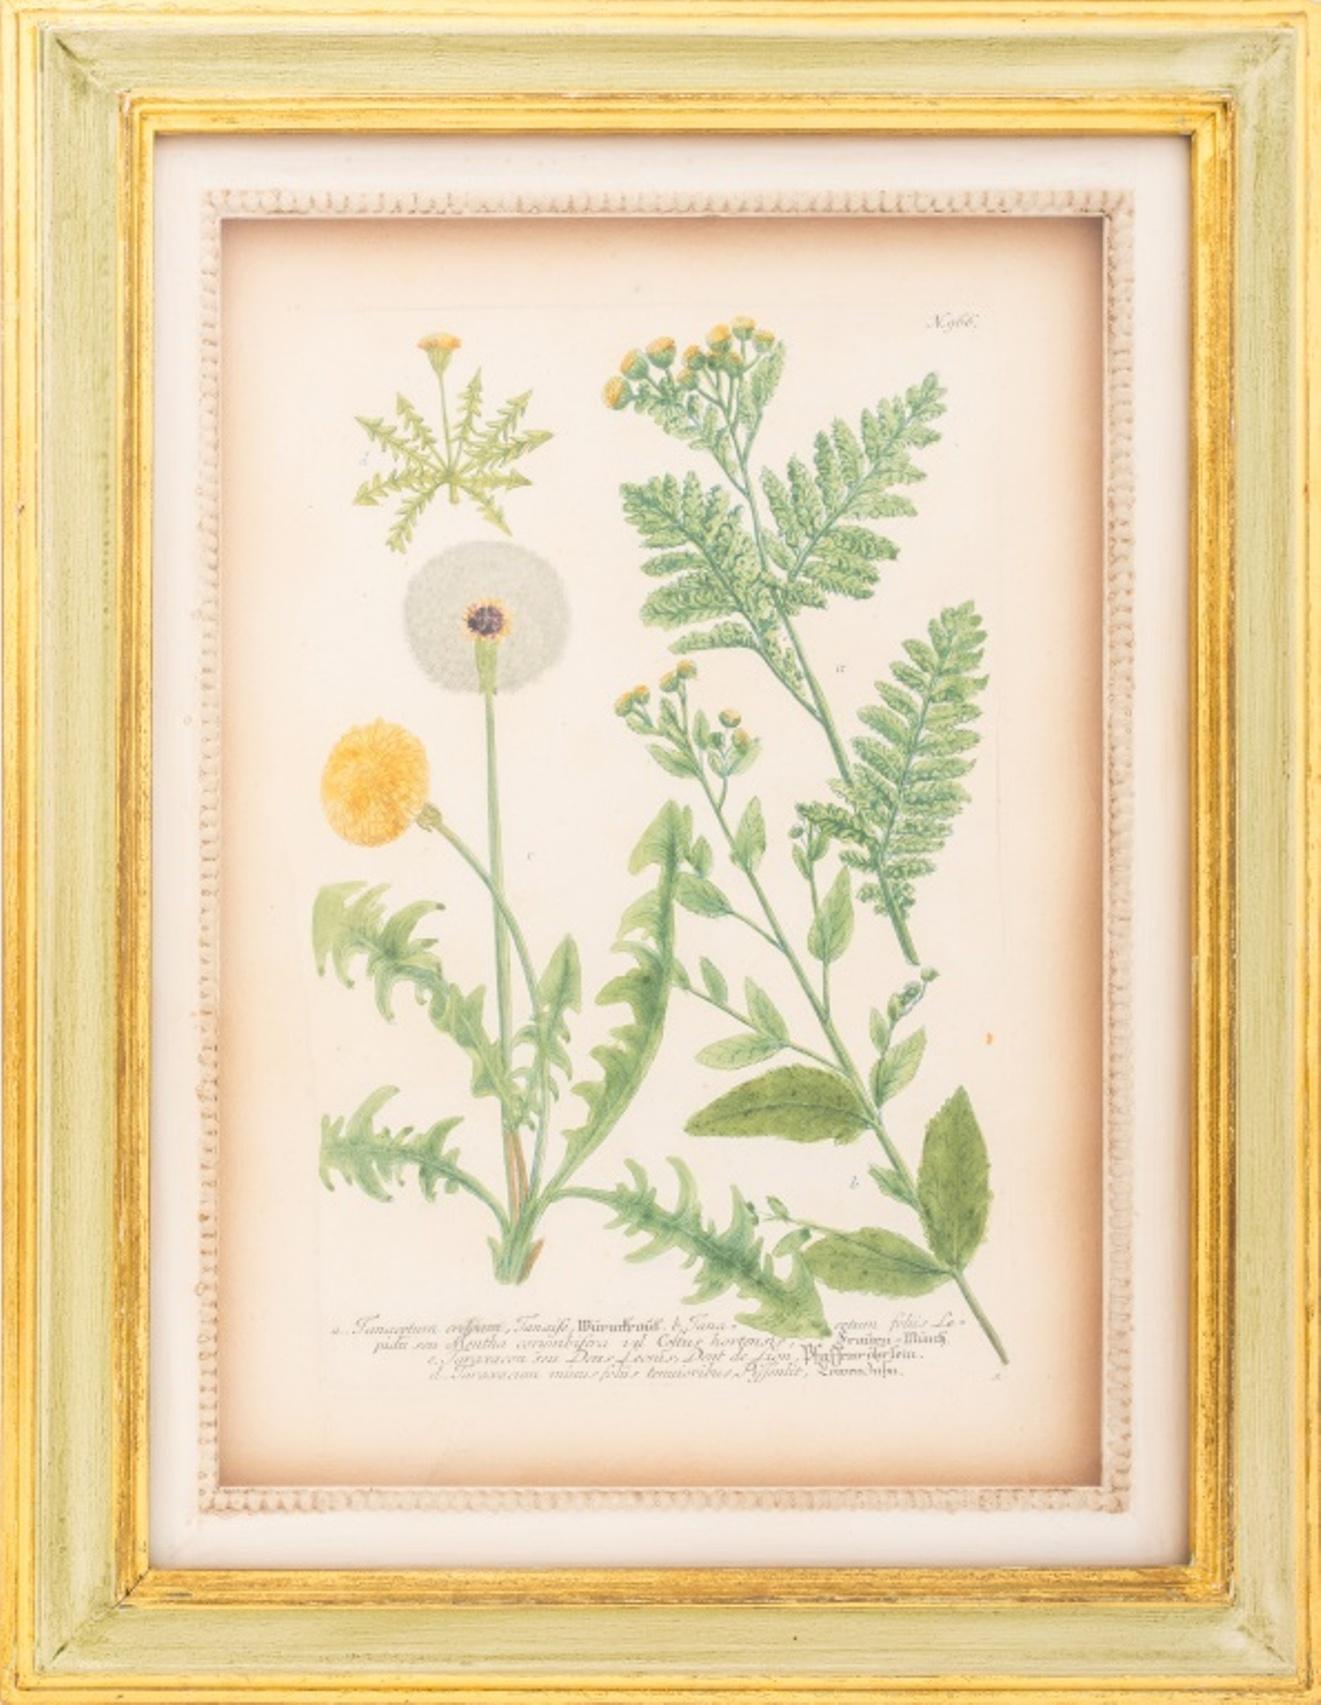 Johann Wilheilm Weinmann (German, 1683 - 1741), two hand-colored botanical engravings, from the 